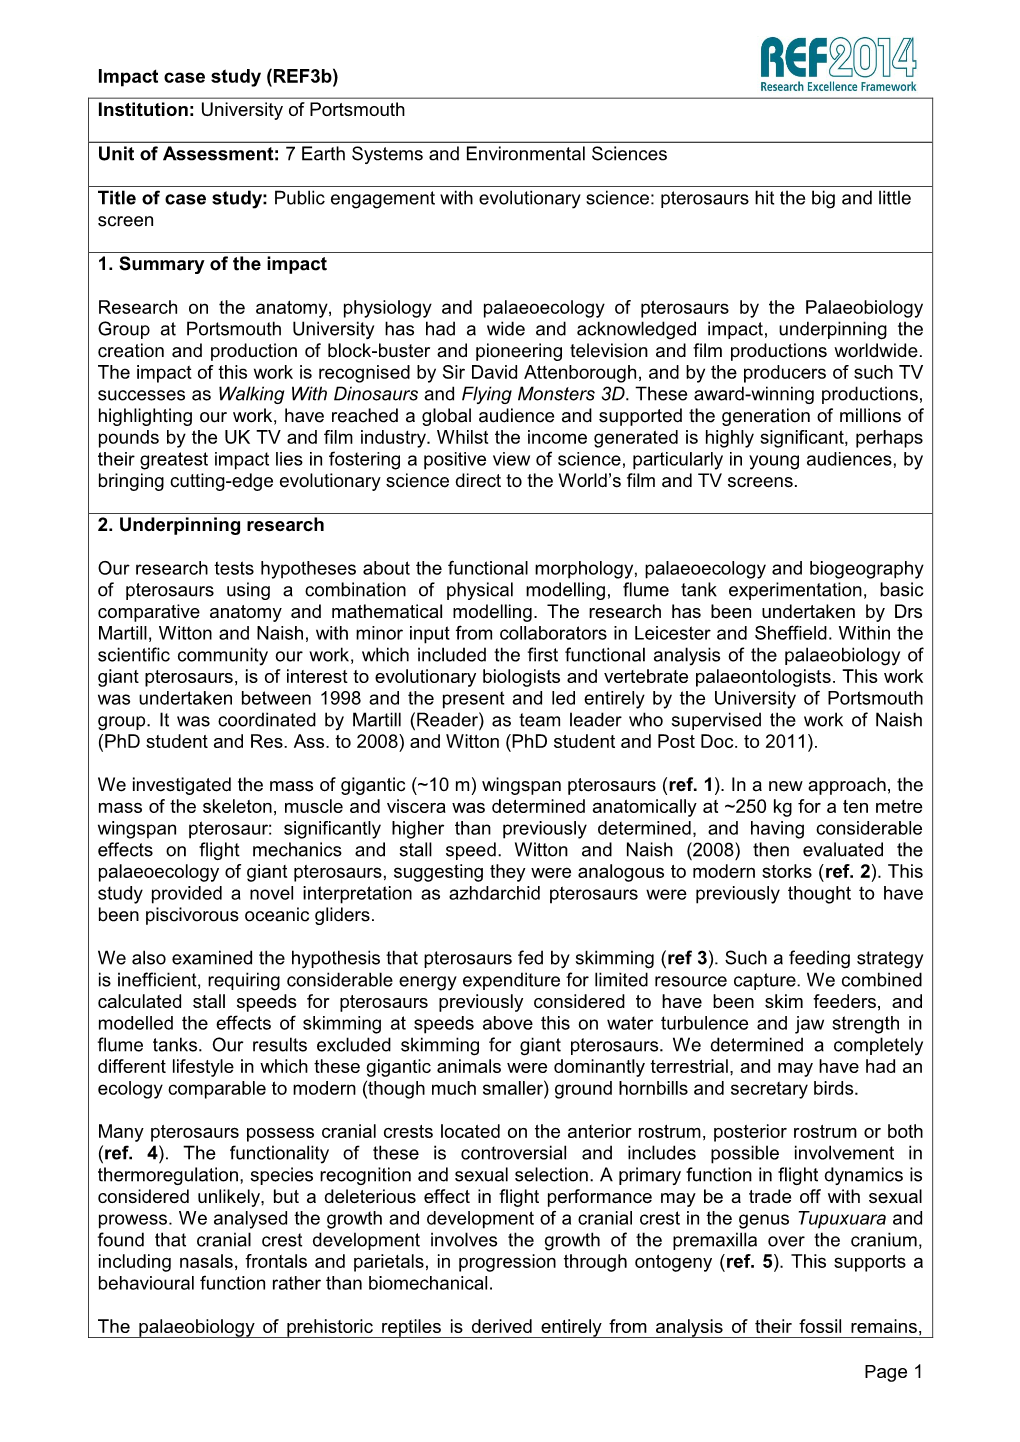 Impact Case Study (Ref3b) Institution: University of Portsmouth